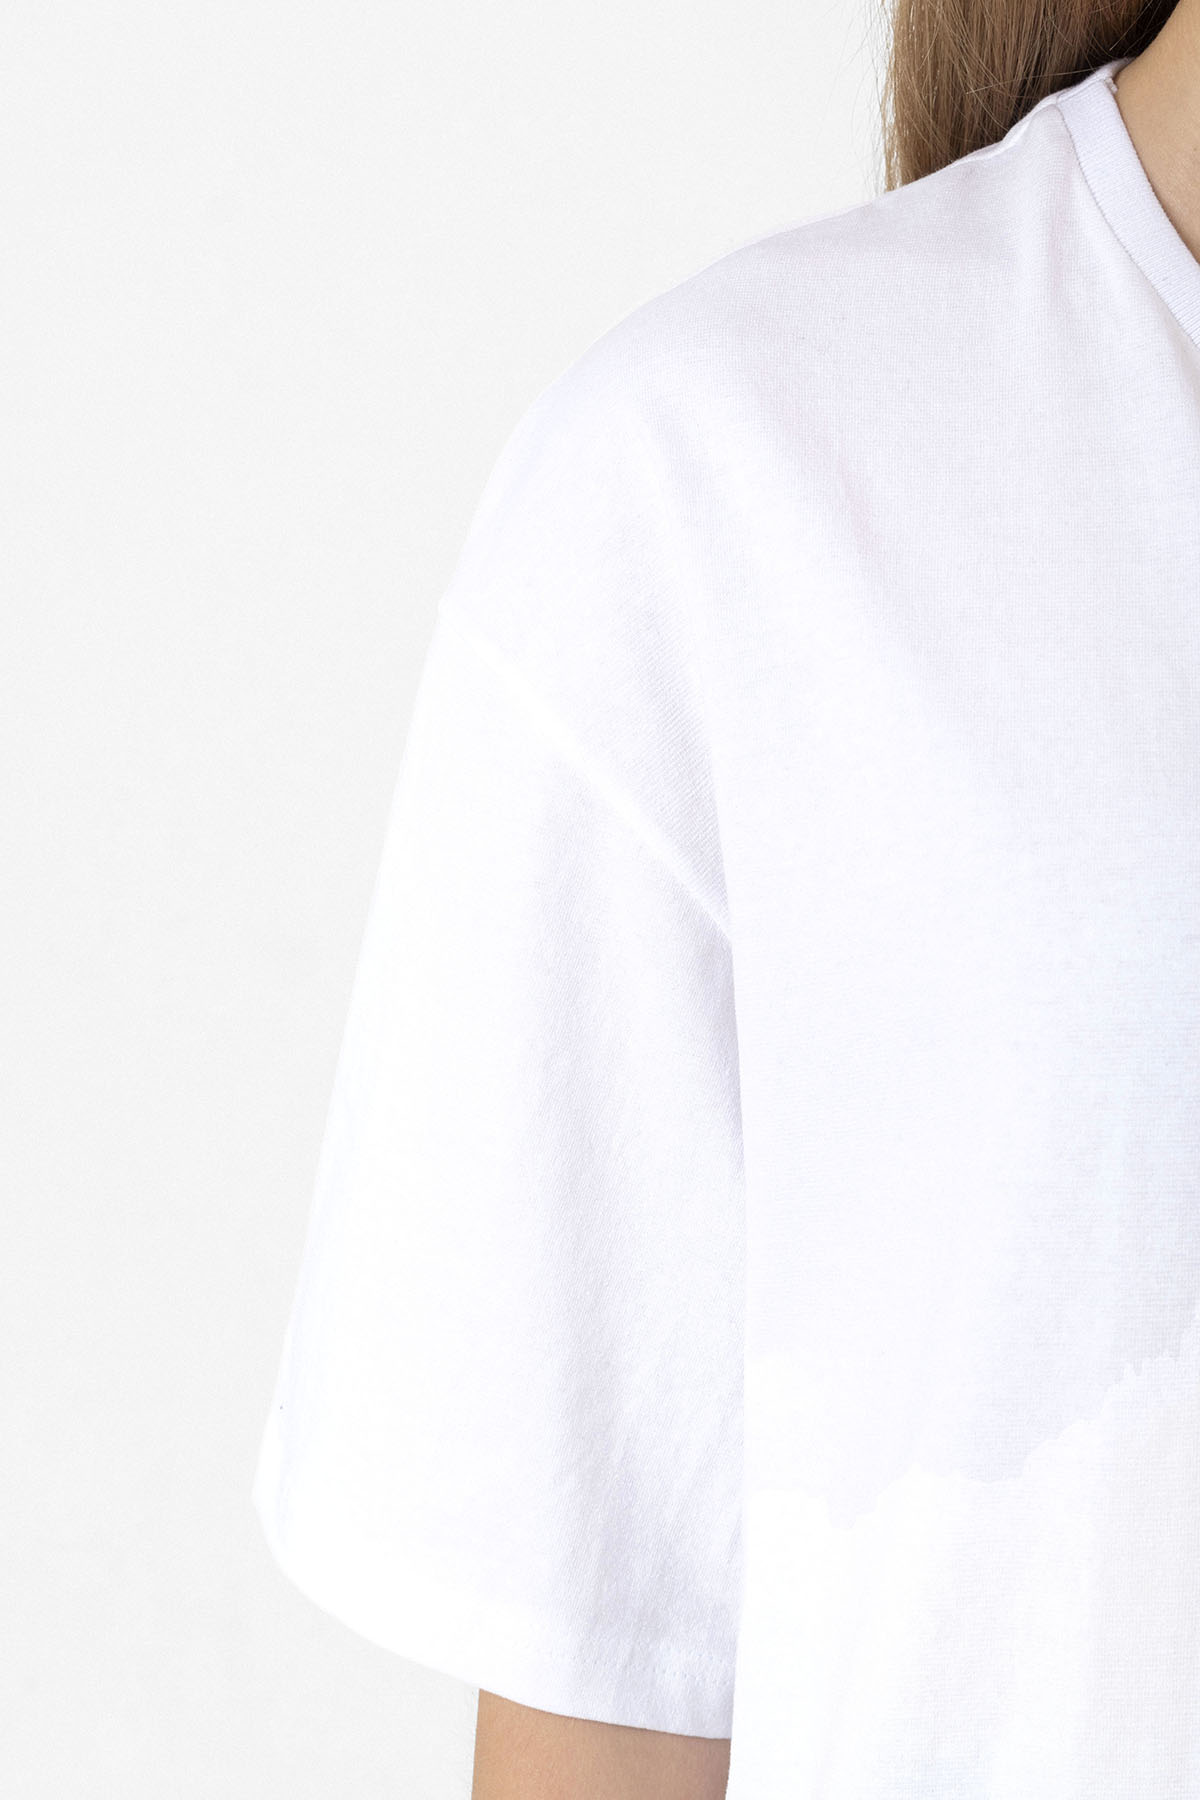 The Walking Dead Glenn Rhee Symbols Beyaz Kadın Oversize Tshirt